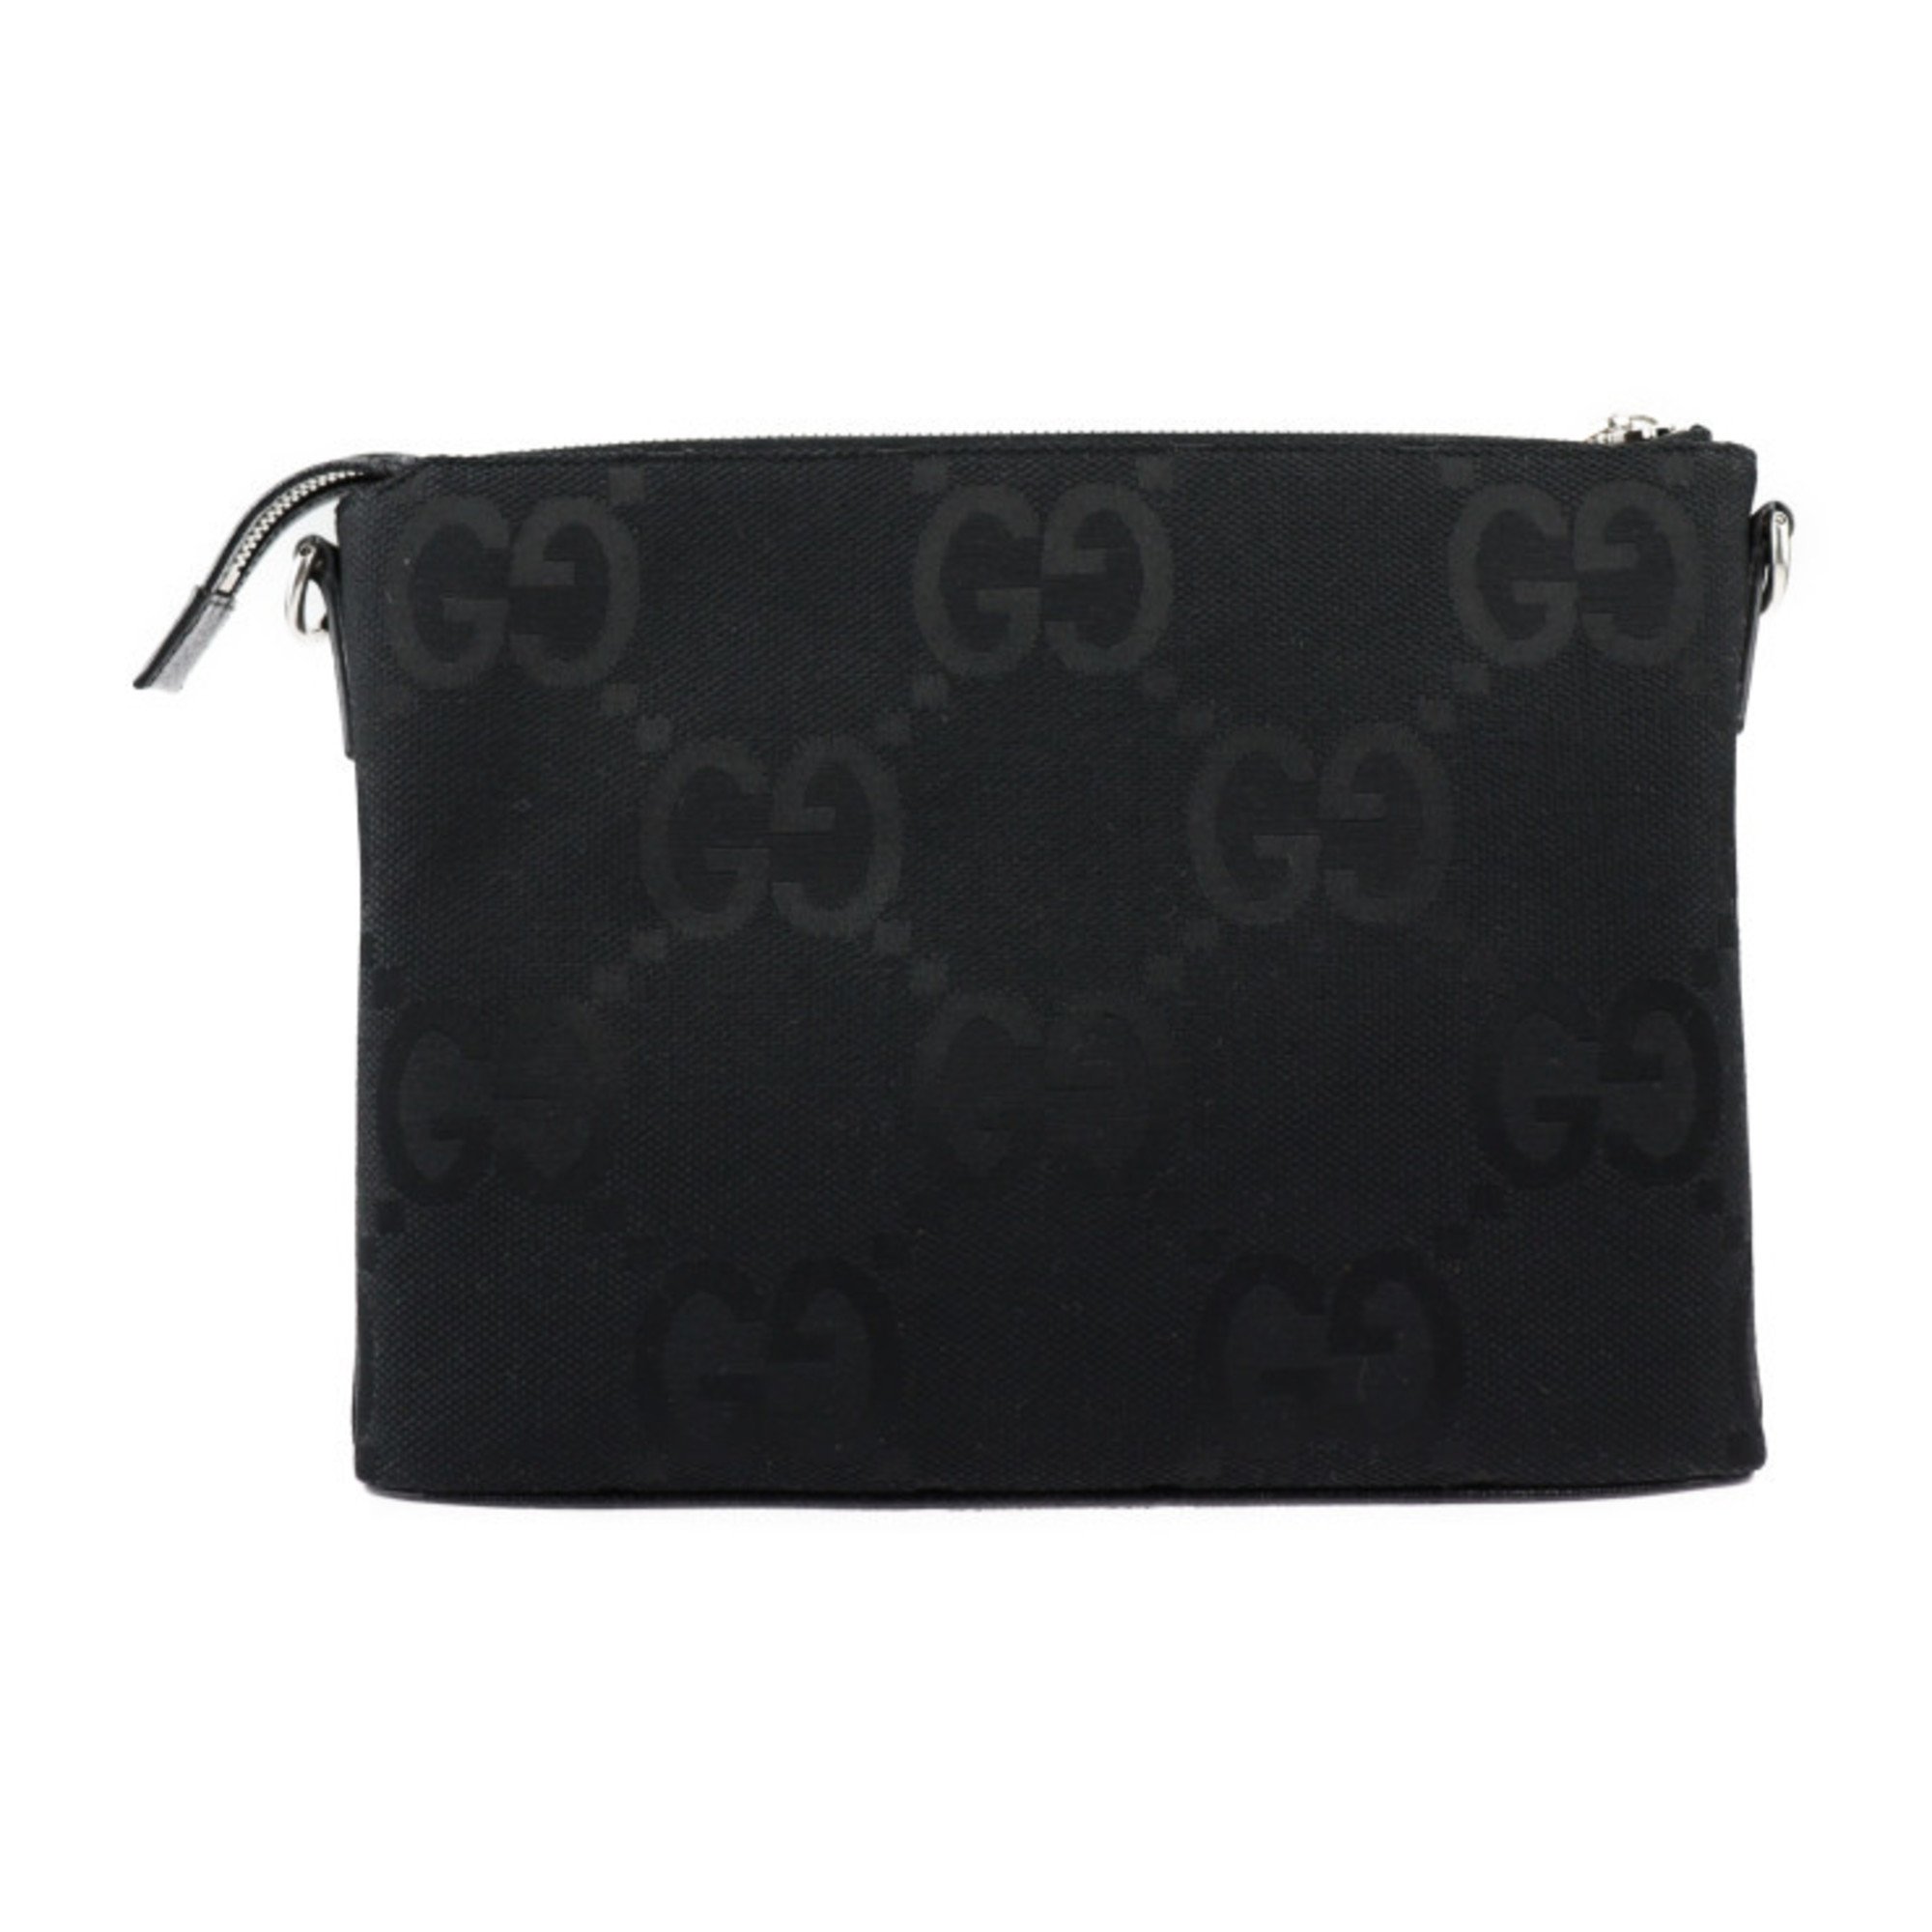 GUCCI Gucci Medium Messenger Jumbo GG Shoulder Bag 739668 Canvas Leather Black Silver Hardware 2WAY Second